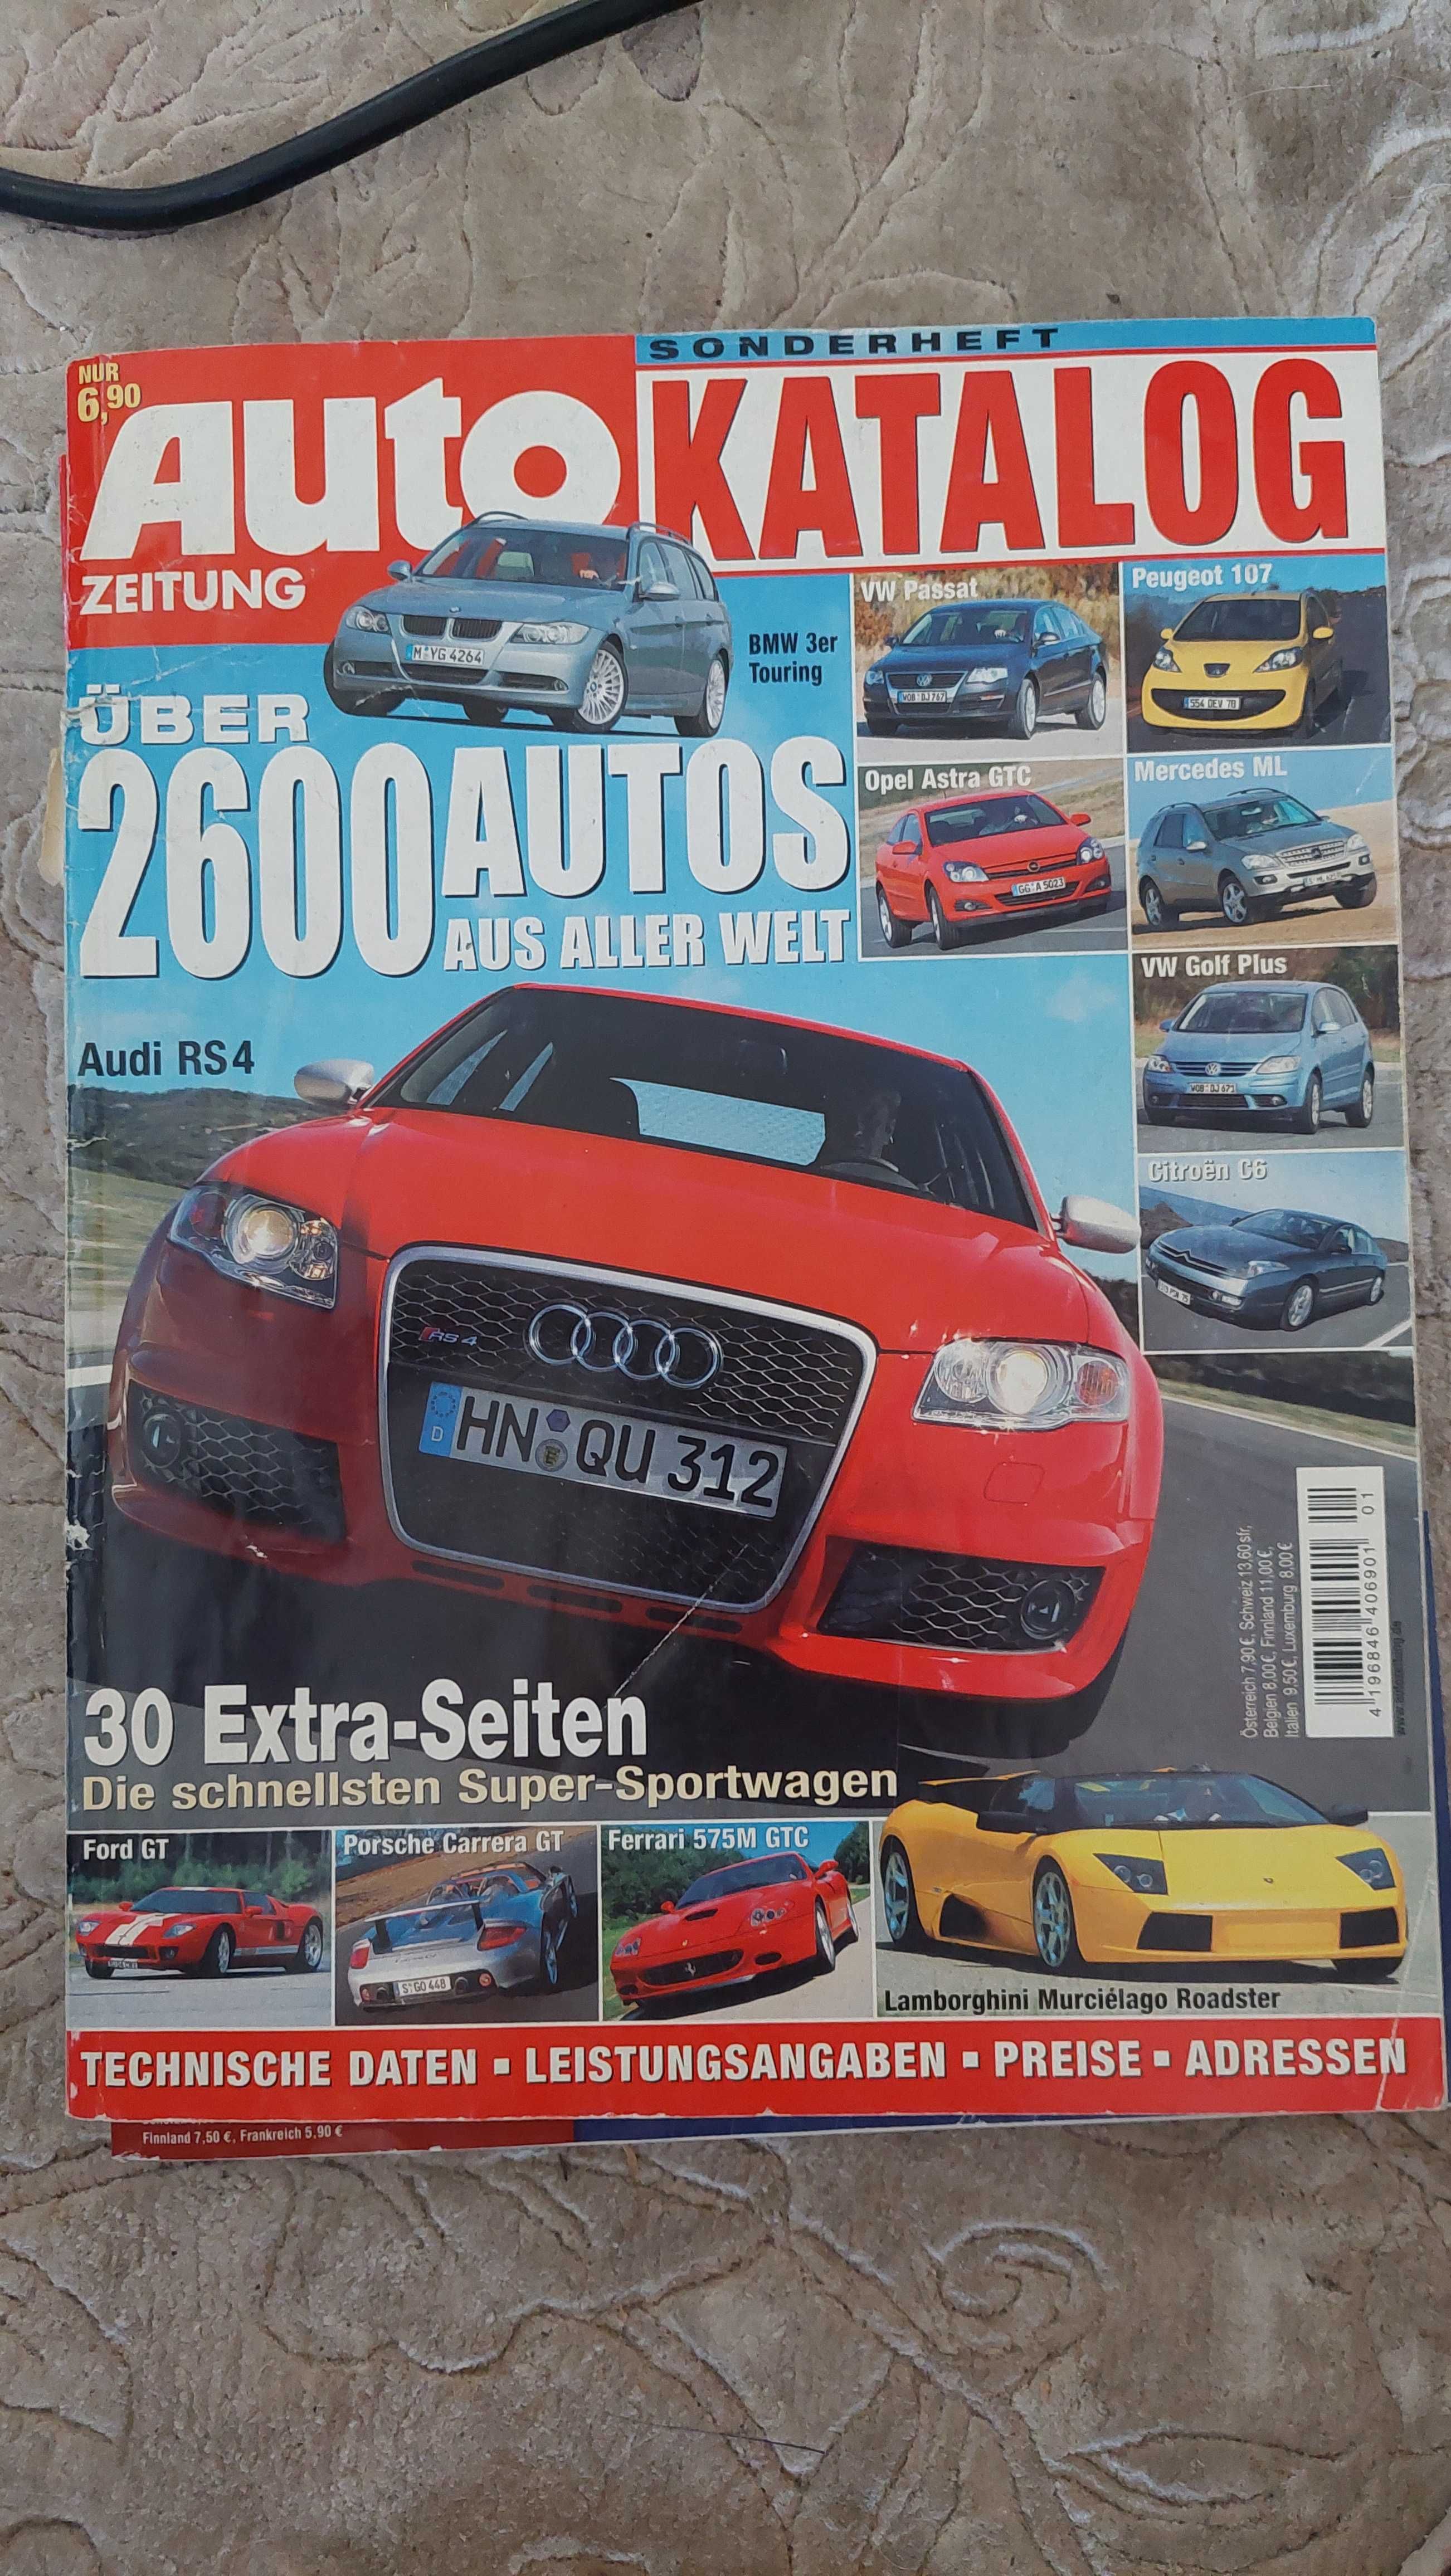 Auto zeitung katalog 2005 czasopismo niemieckie